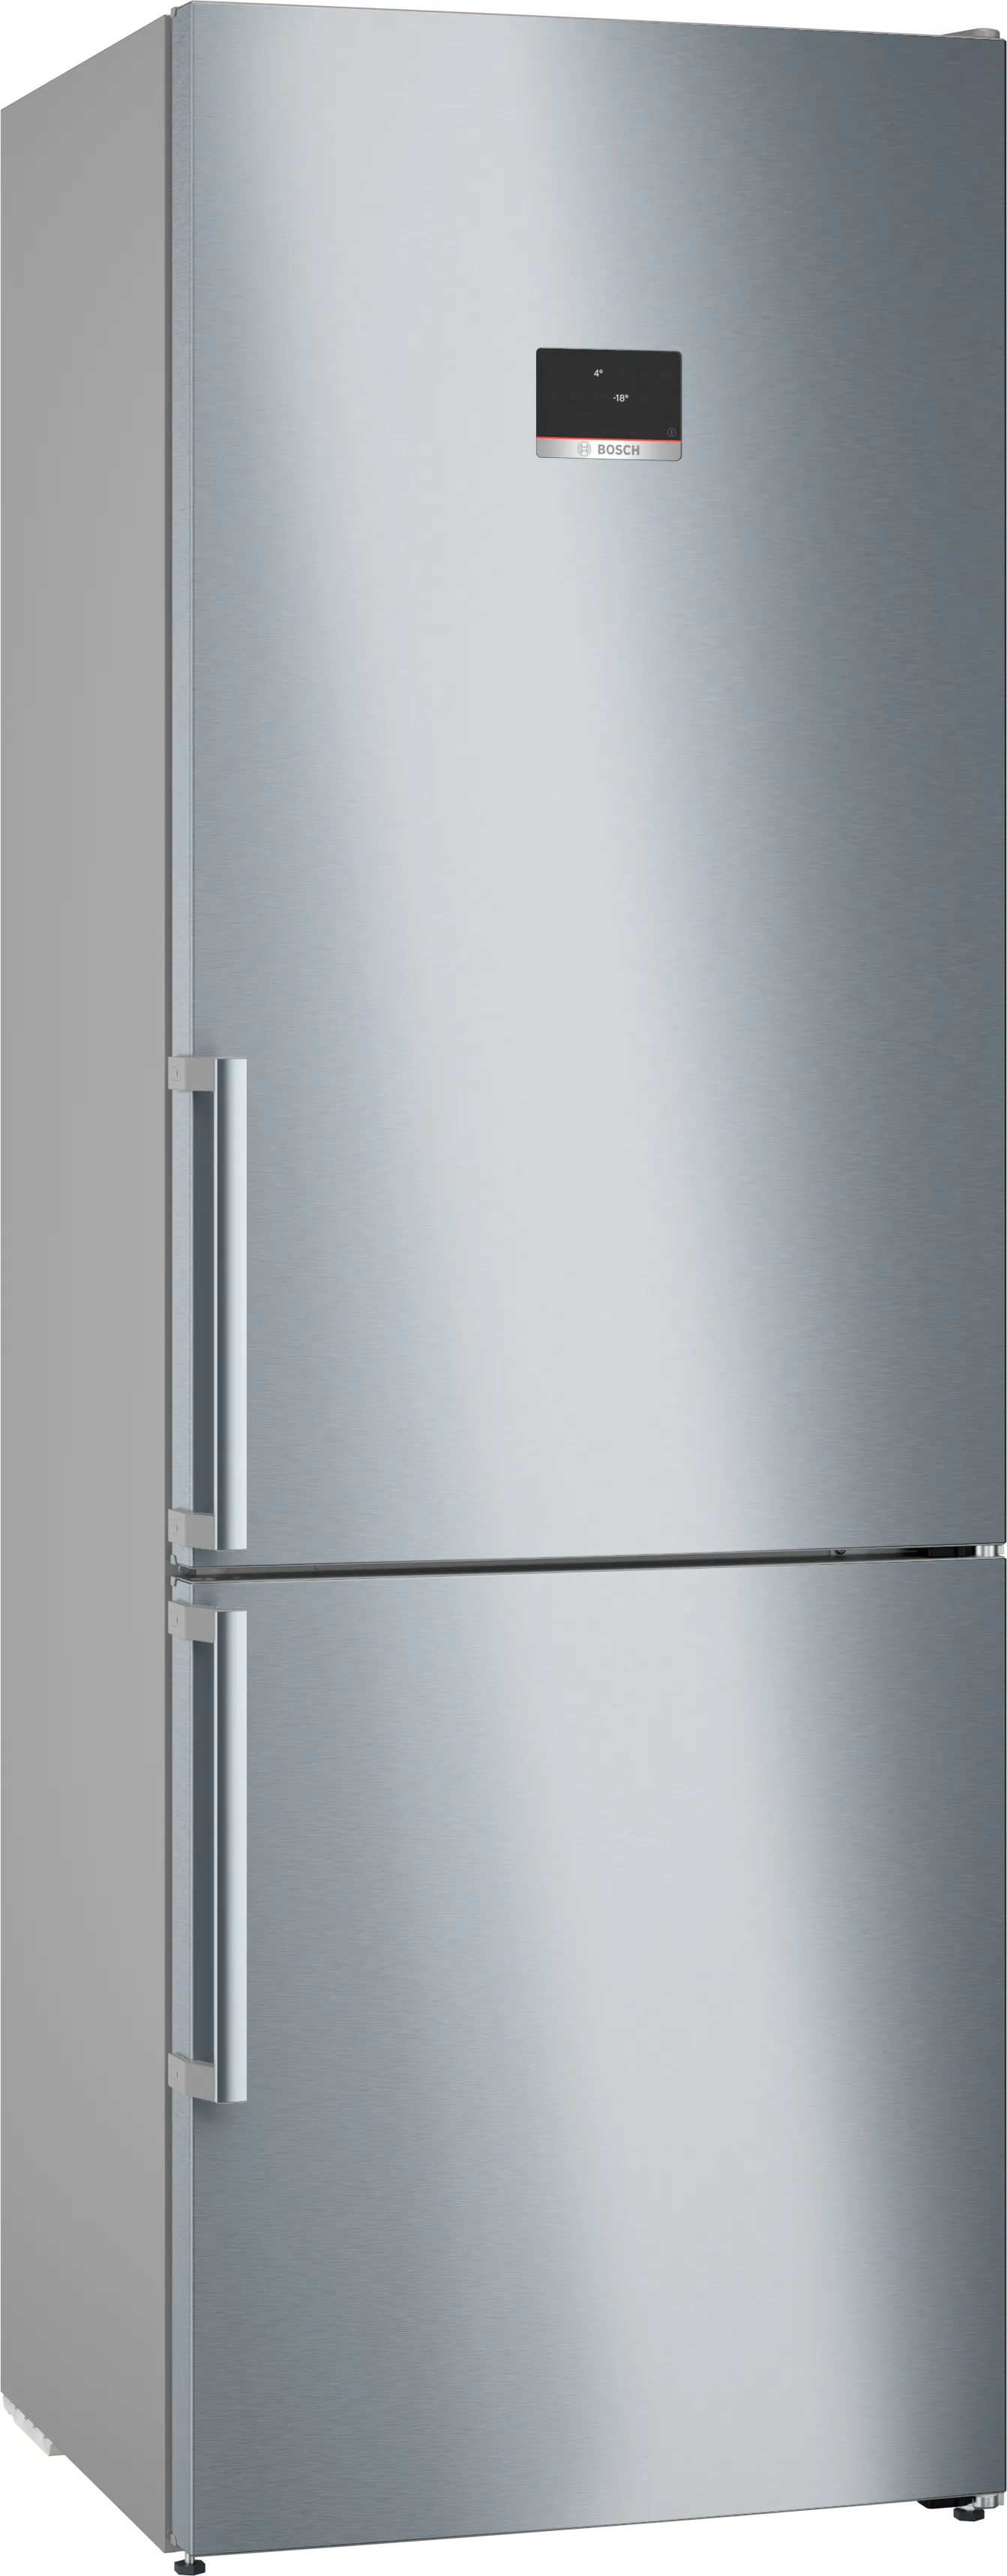 Series 6, free-standing fridge-freezer with freezer at bottom, 203 x 70 cm, Stainless steel (with anti-fingerprint), KGN49AIBT